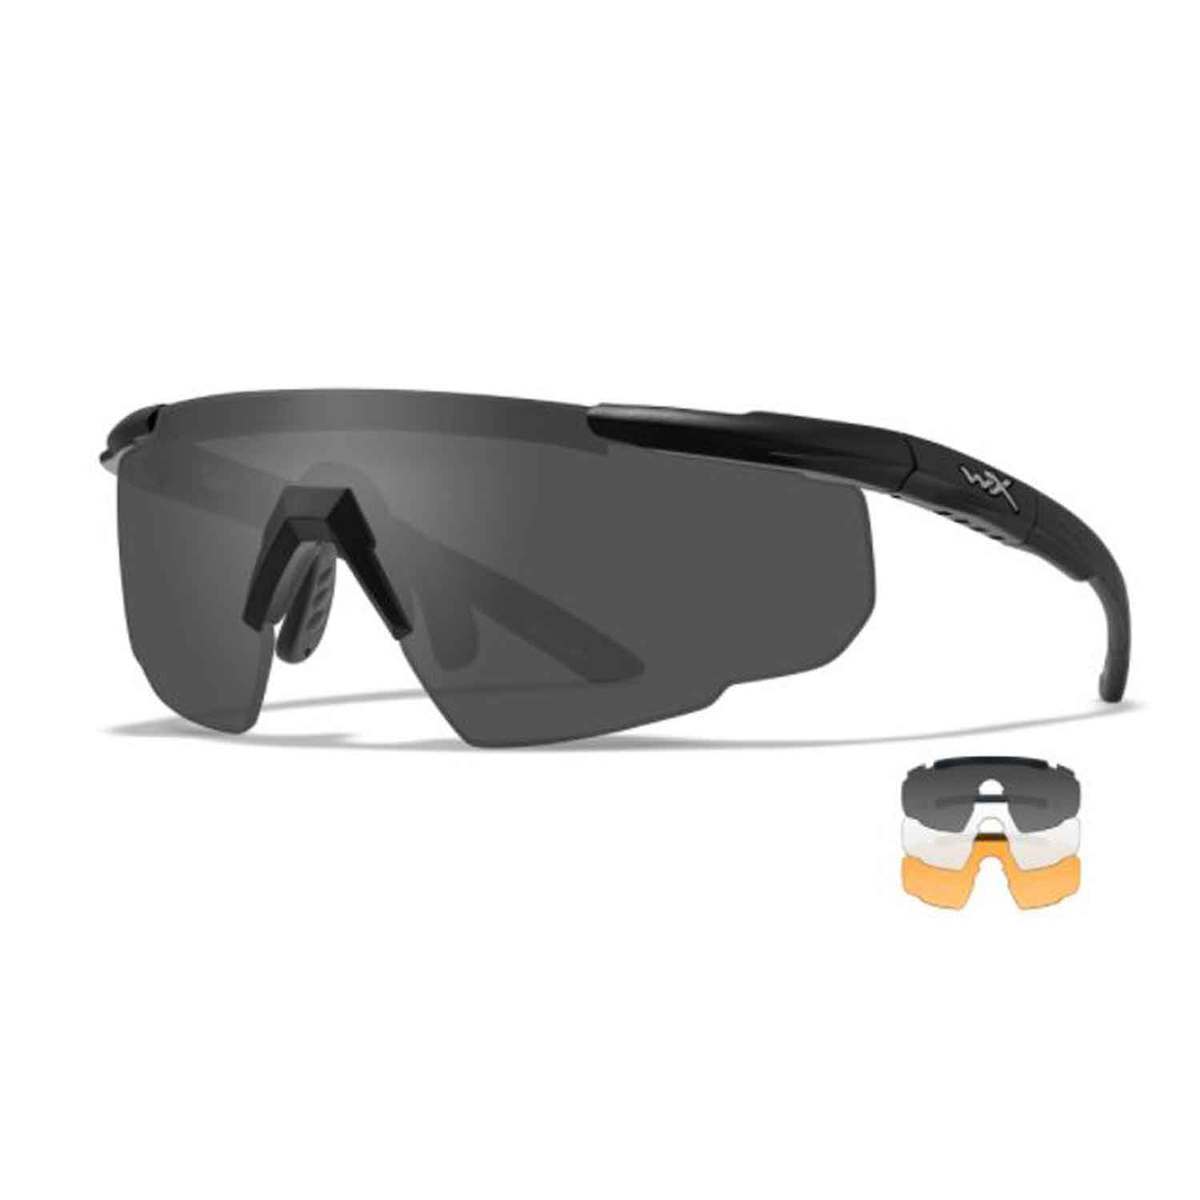 Wiley X Saber Advanced Shooting Glasses | Kenzies Optics